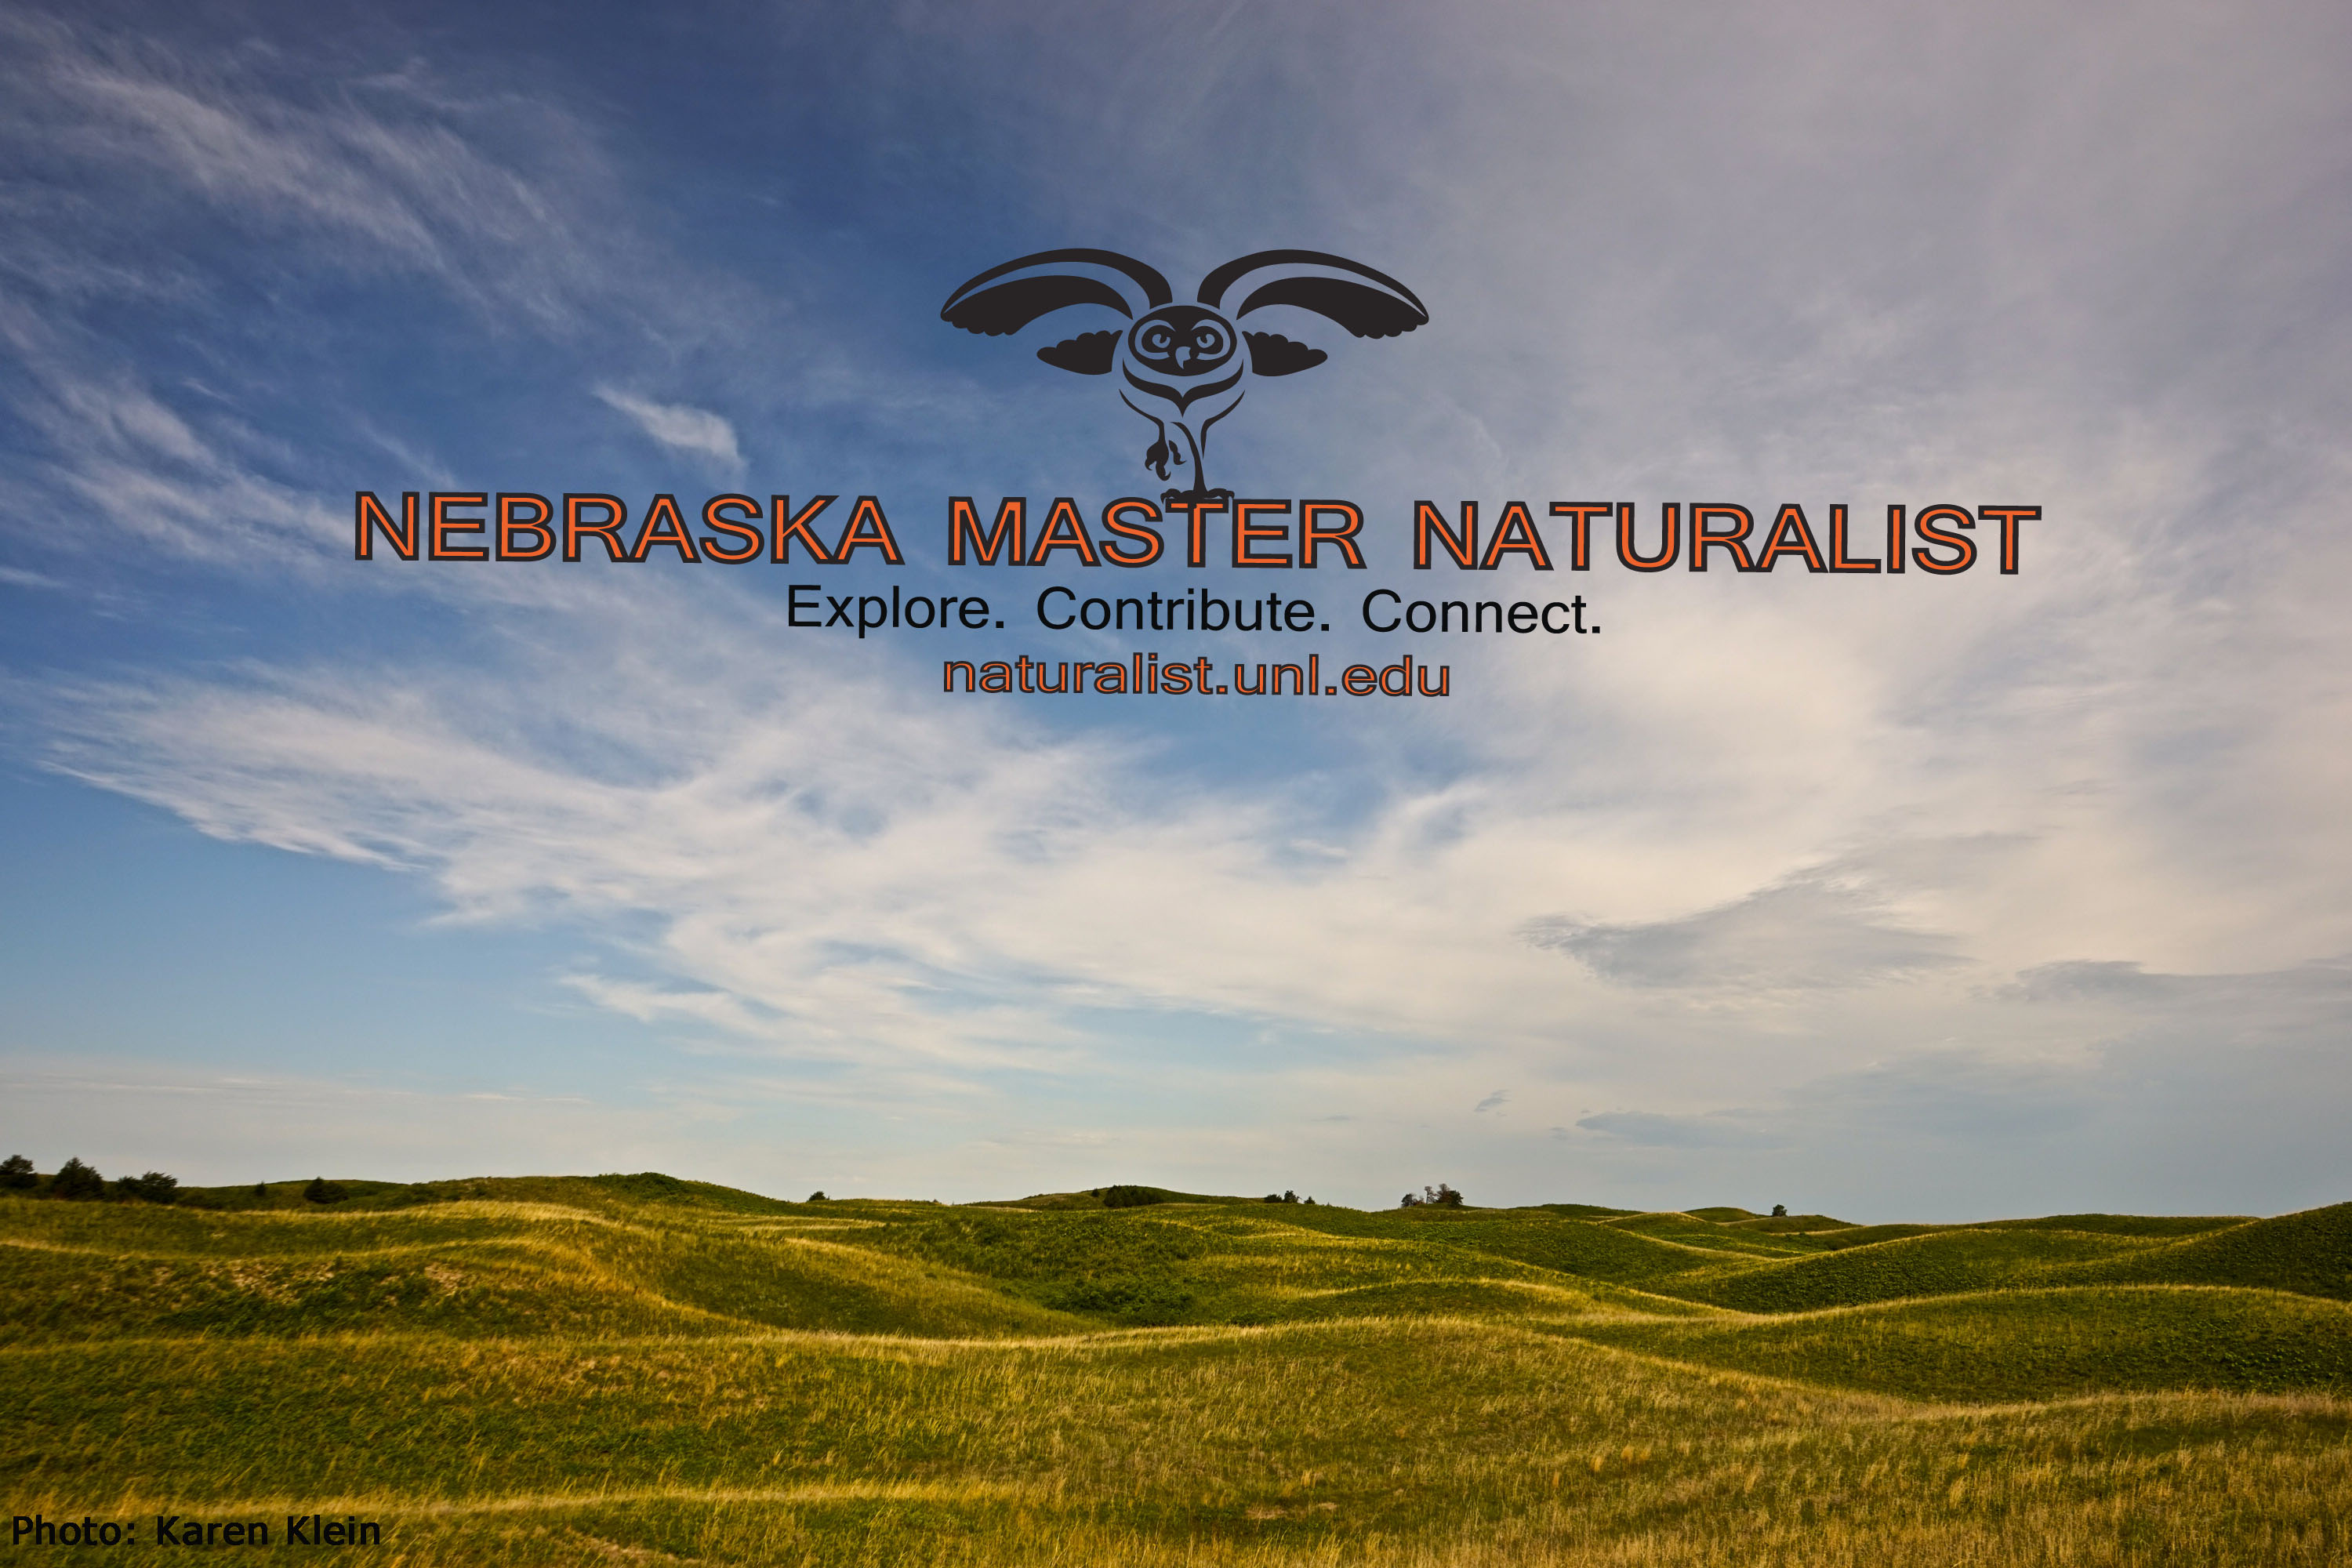 The Nebraska Master Naturalist training sessions kick off May 19.